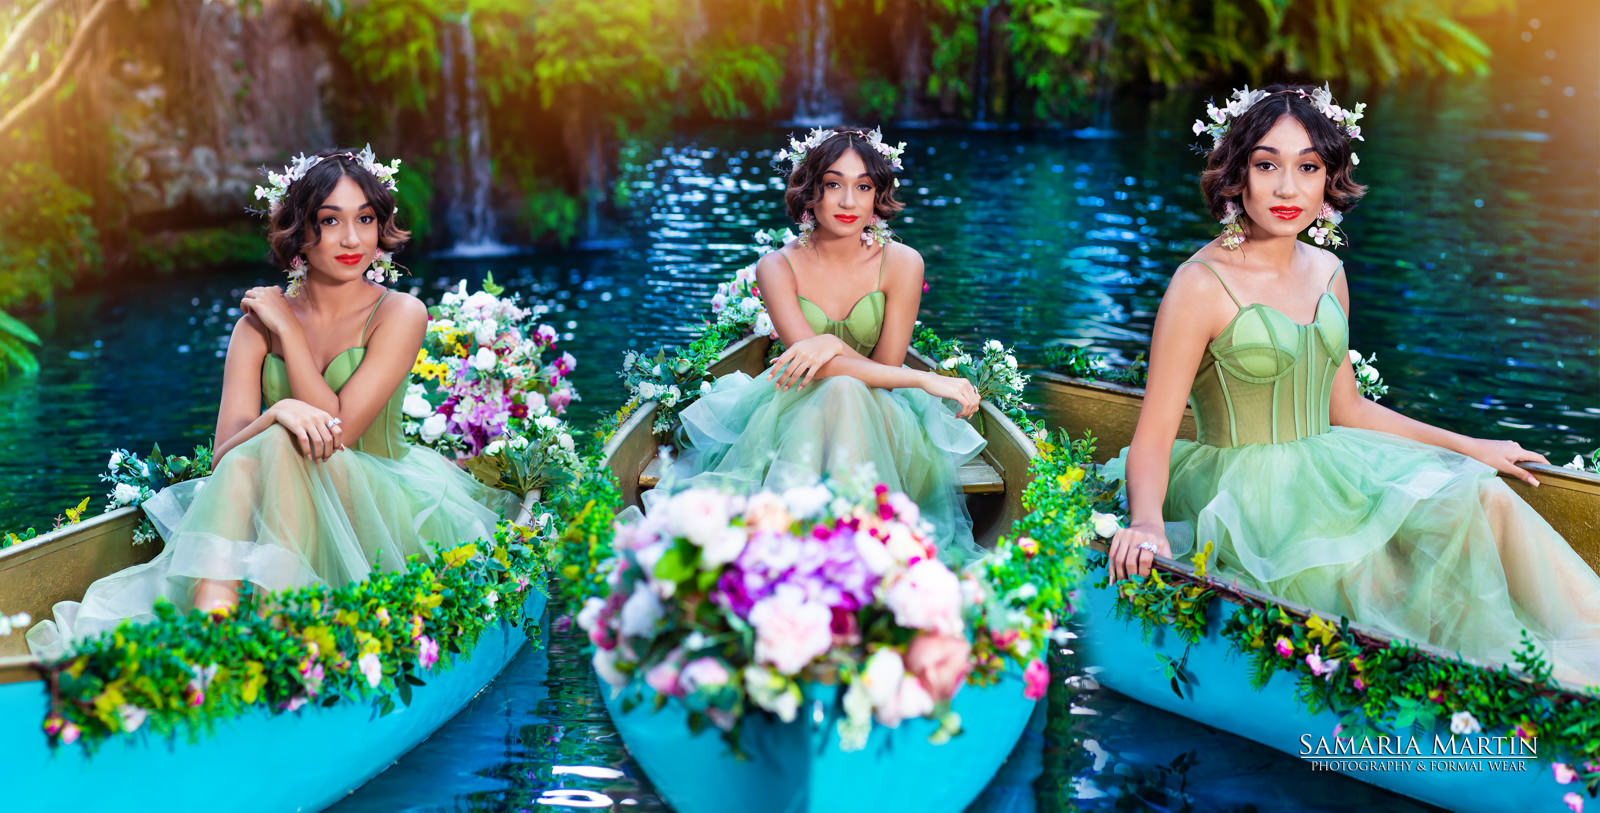 15 photoshoot with flowers, best Tampa photographer, Samaria Martin, green quinceanera dresses, Marys Bridal, Villa Turqueza lake 2